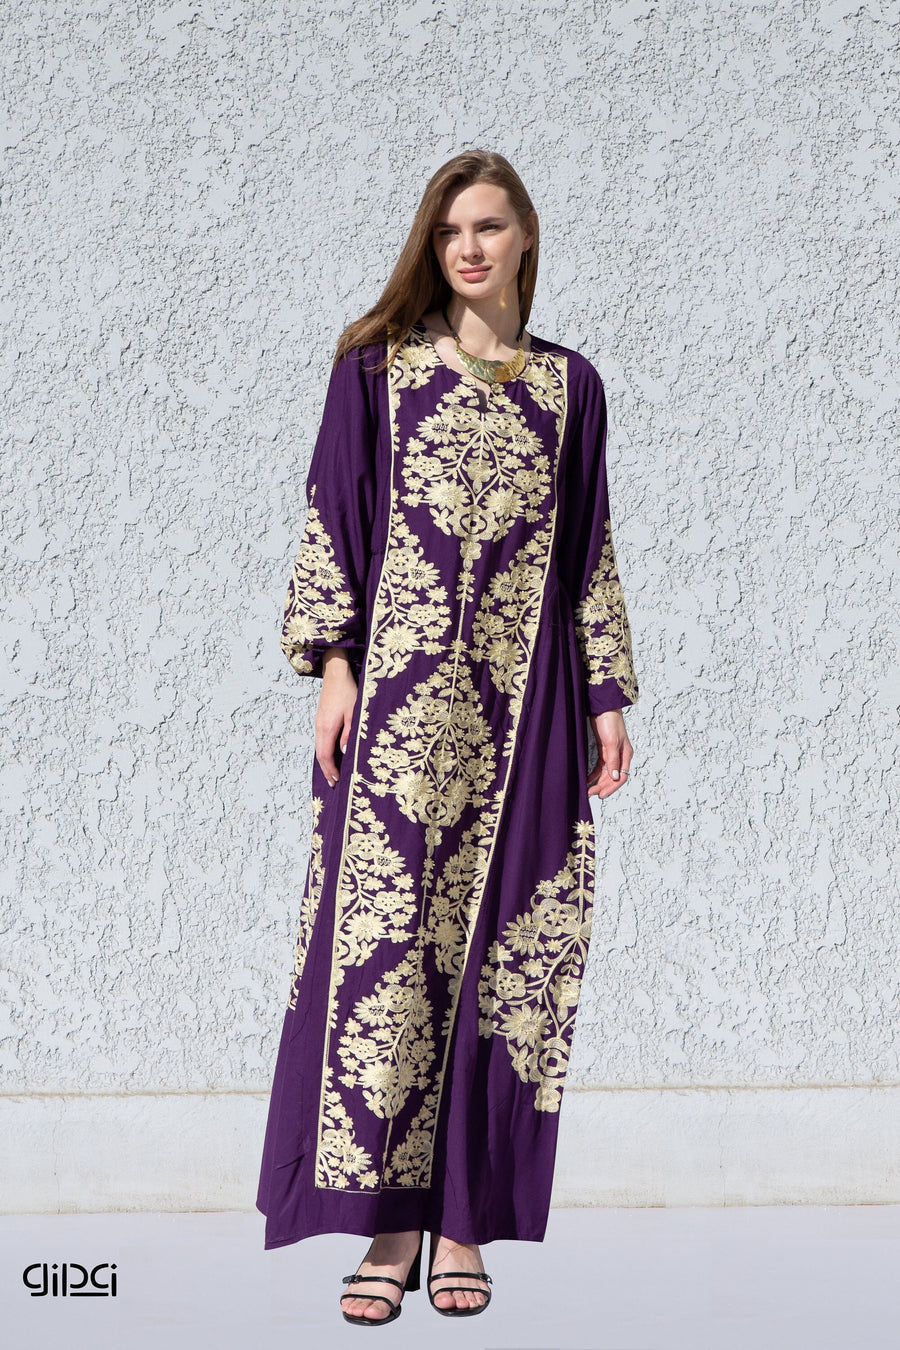 Elegant Purple embroidered kaftan dress, Cotton caftan women, Long sleeve caftan, Chic embroidered caftan, High quality Egyptian cotton